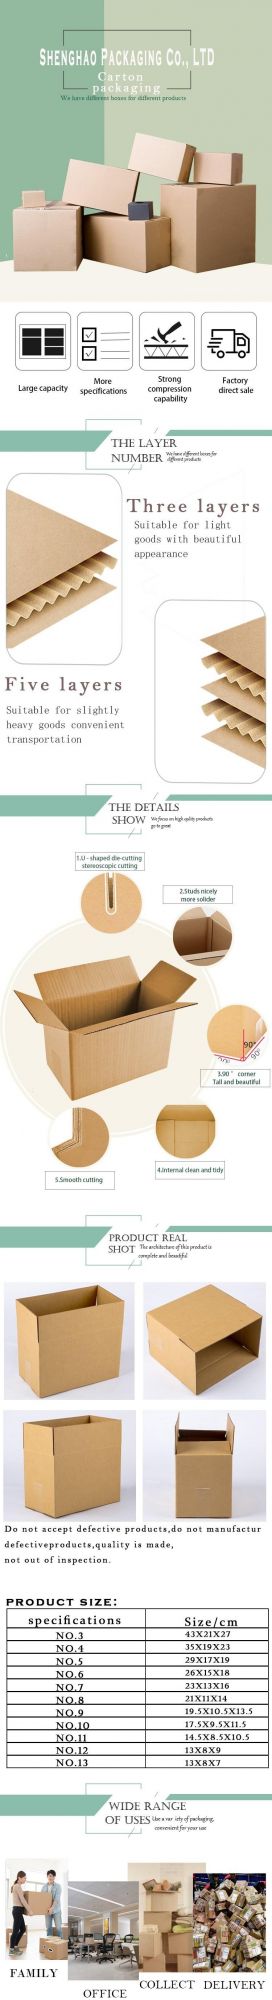 Biological Explanatory Materials Express Packaging Shipping Wholesale Cartons Packaging Carton